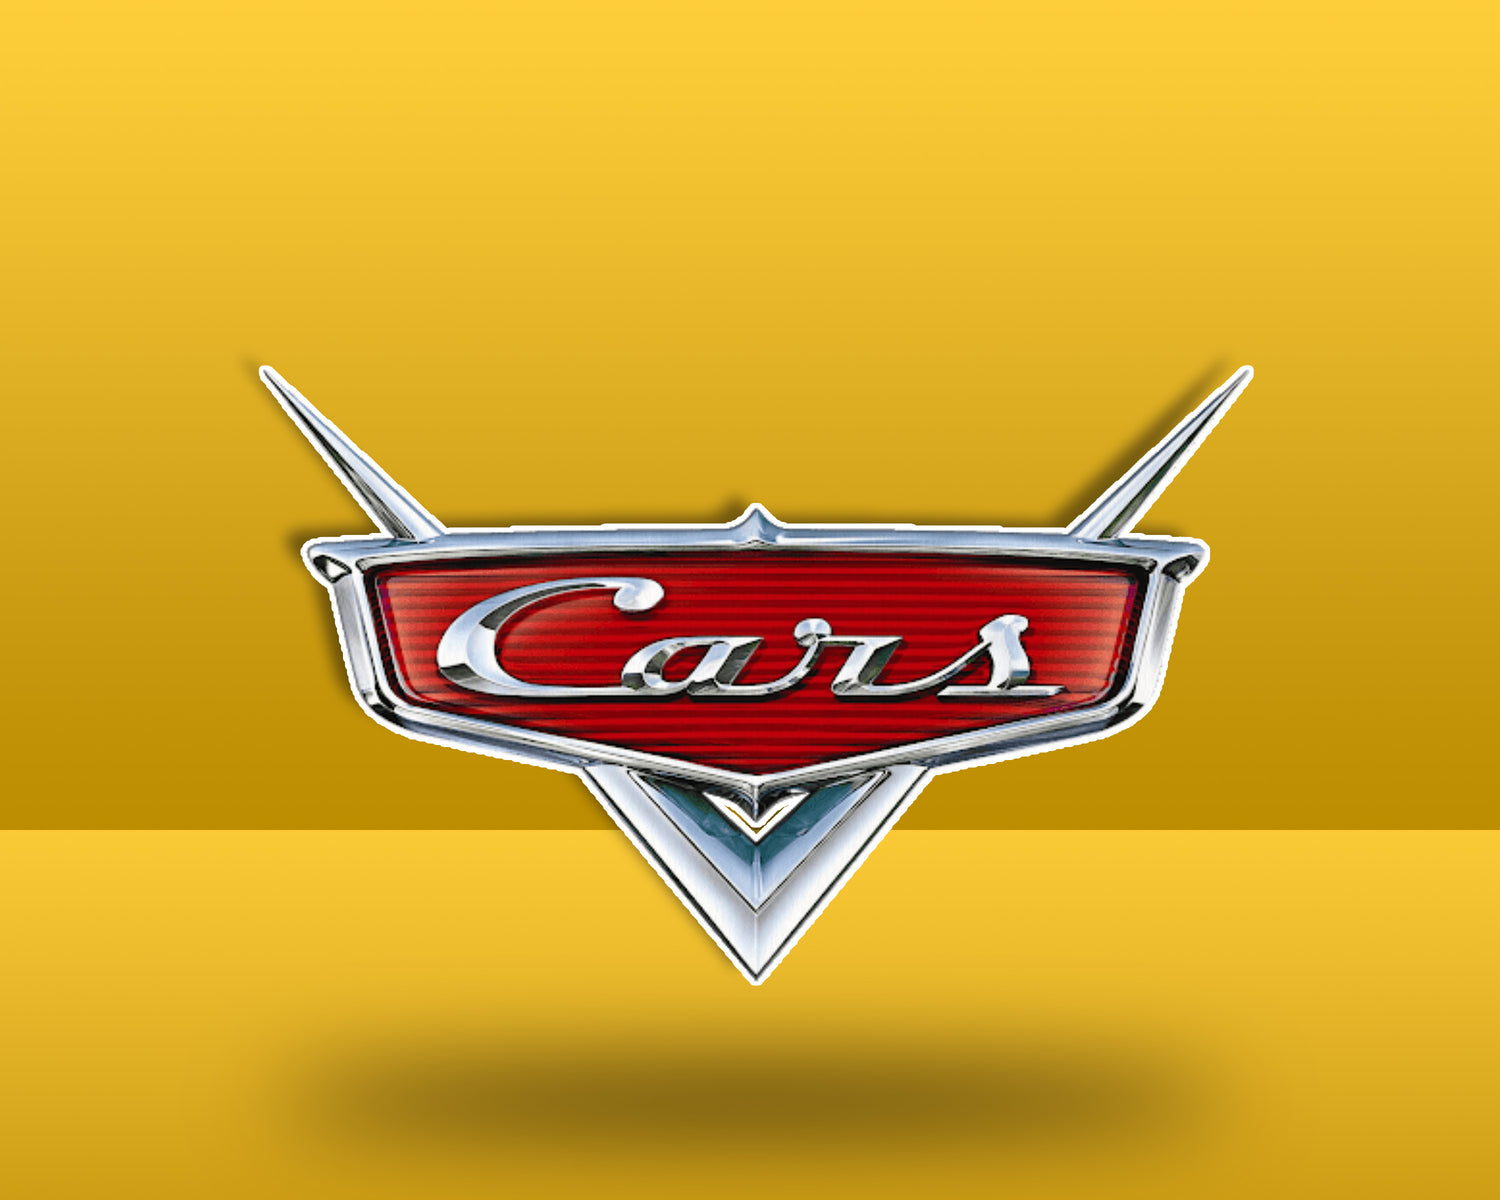 PSI Car Theme Cutout - 03